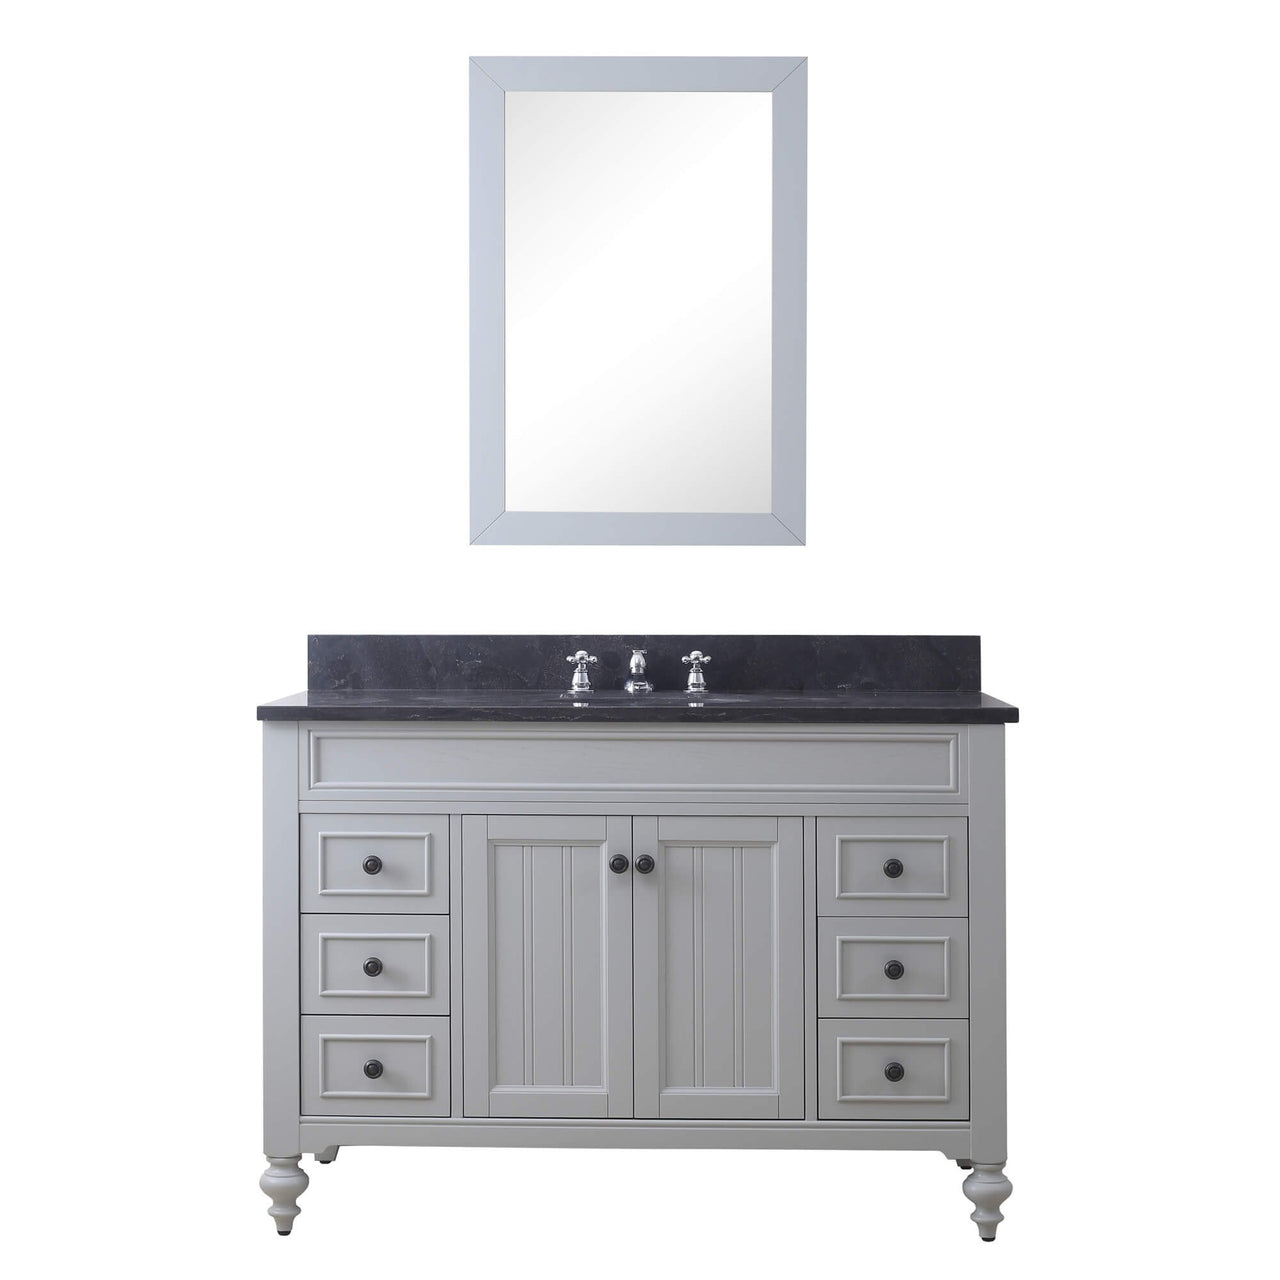 POTENZA 48" Earl Grey Single Sink Bathroom Vanity With Matching Framed Mirror Vanity Water Creation 